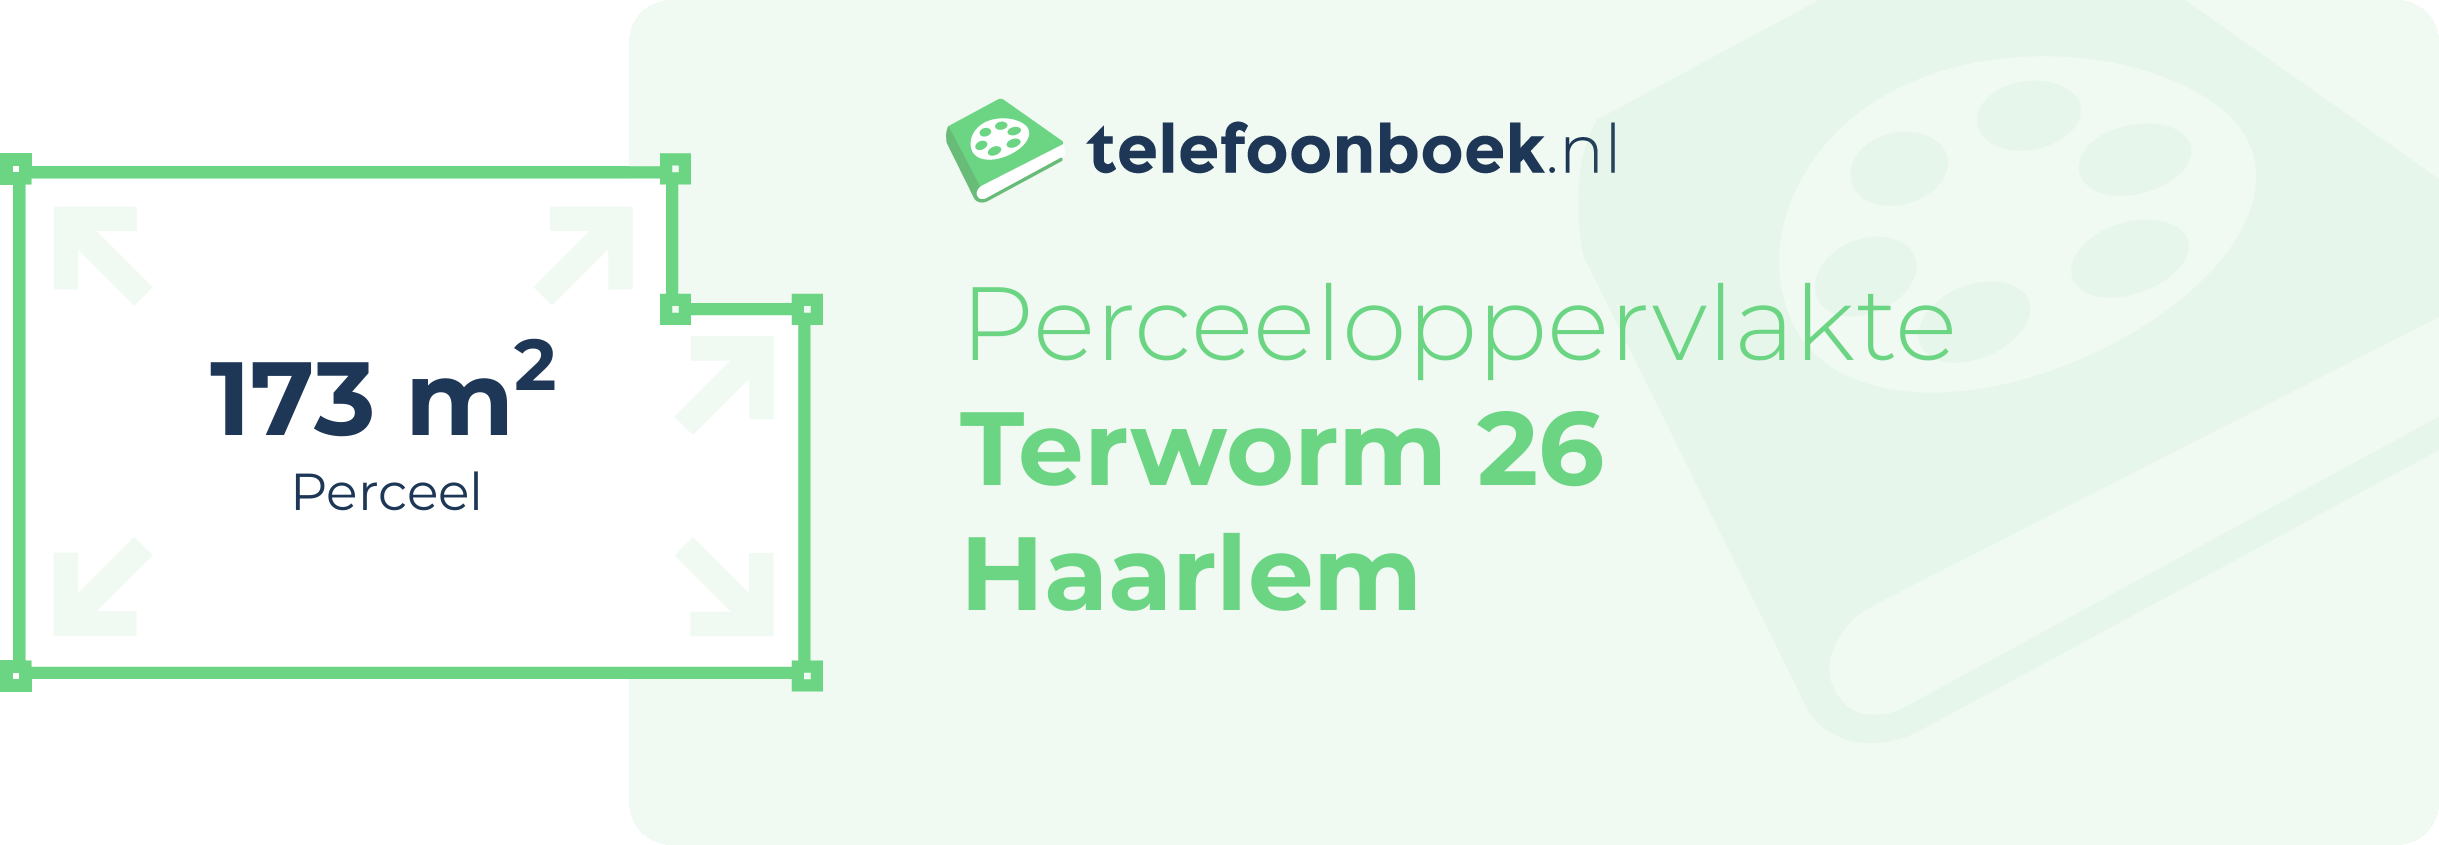 Perceeloppervlakte Terworm 26 Haarlem